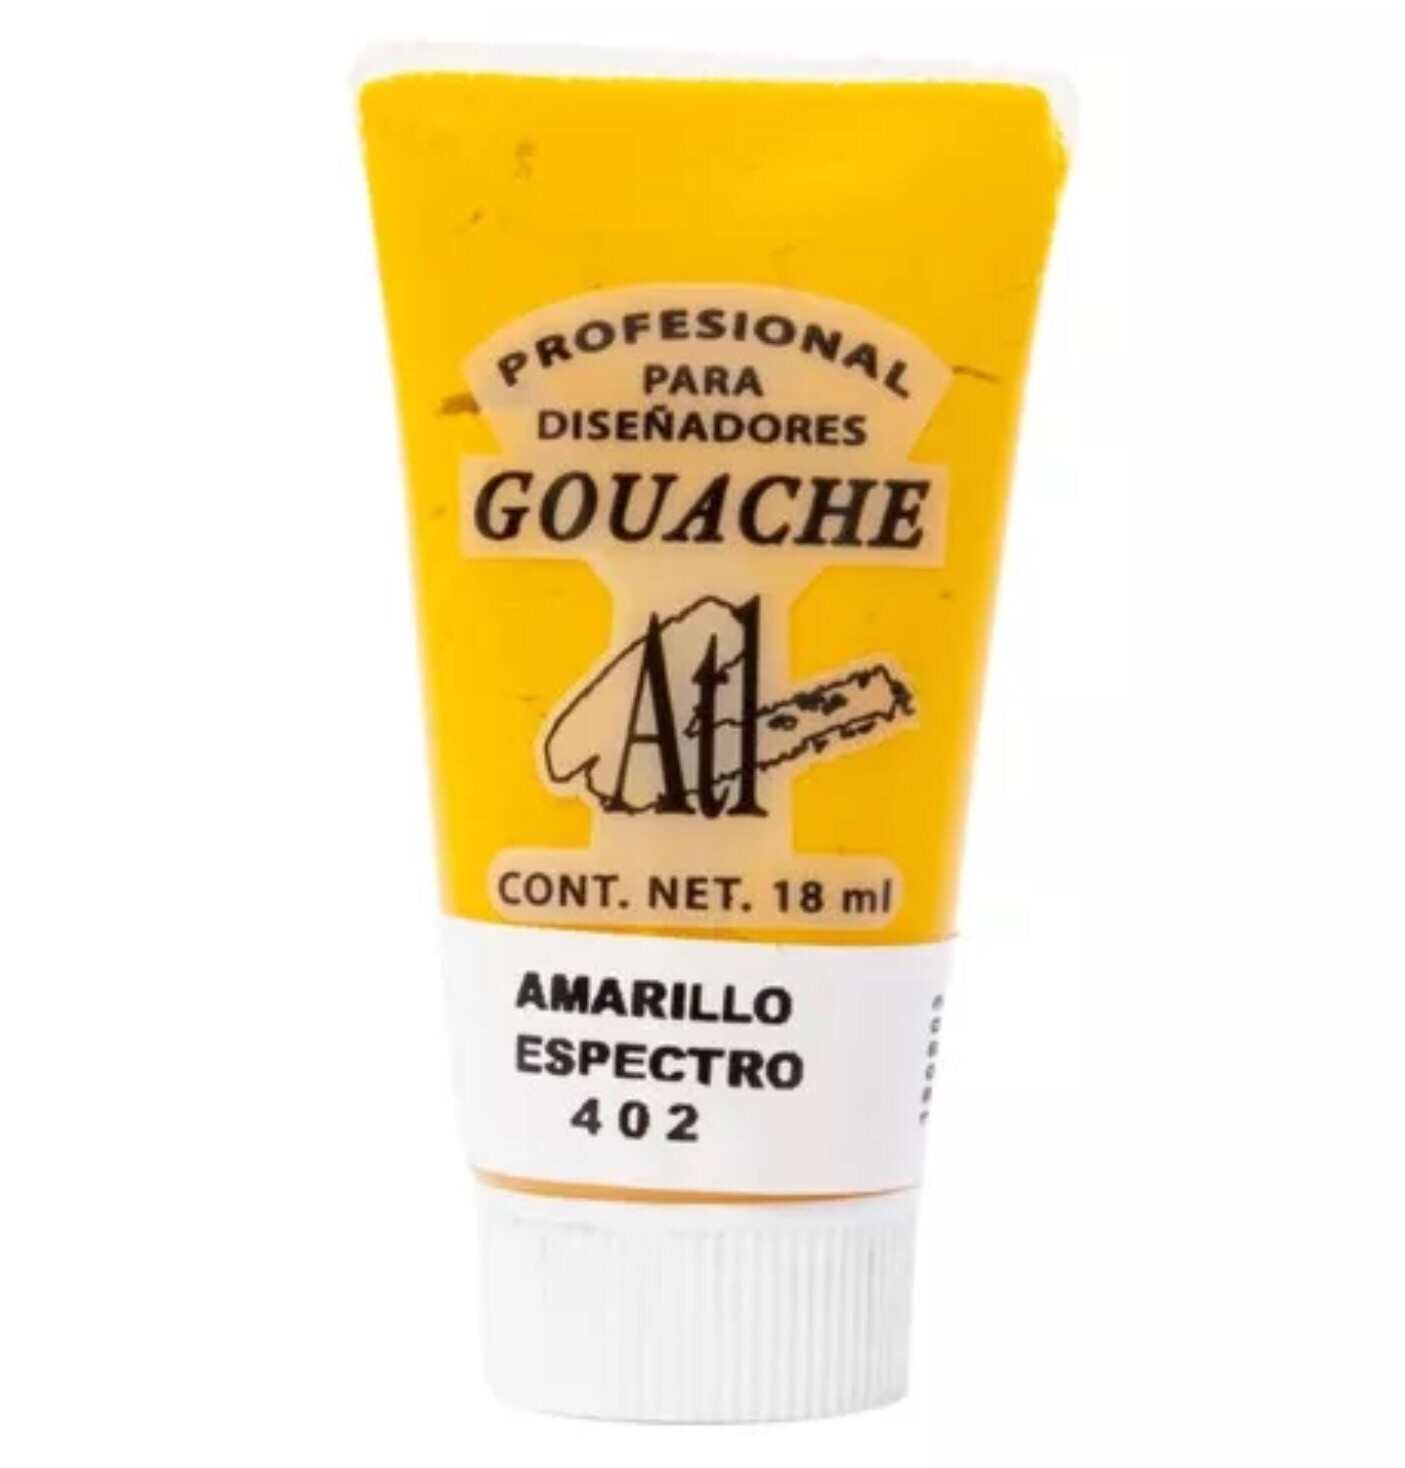 Gouache Atl 18 ml. Amarillo Espectro